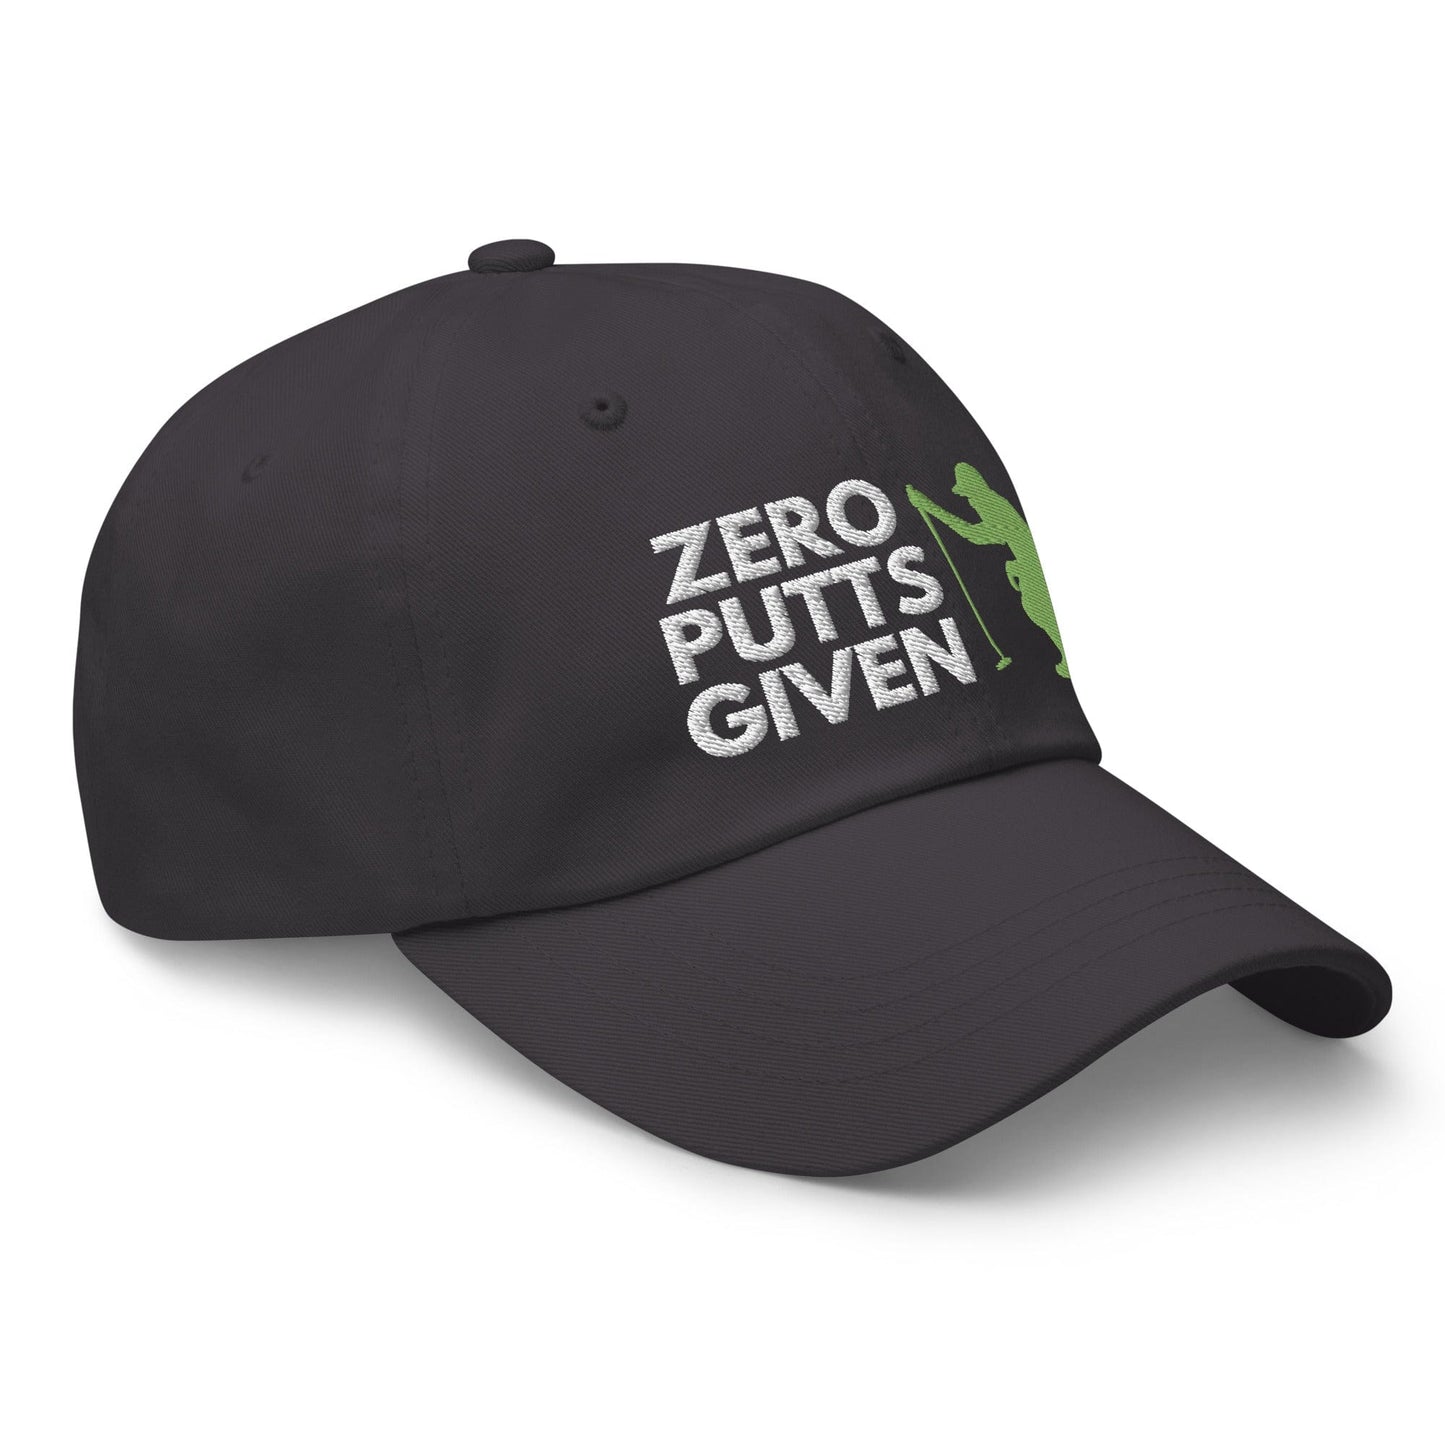 Funny Golfer Gifts  Dad Cap Dark Grey Zero Putts Given Hat Cap